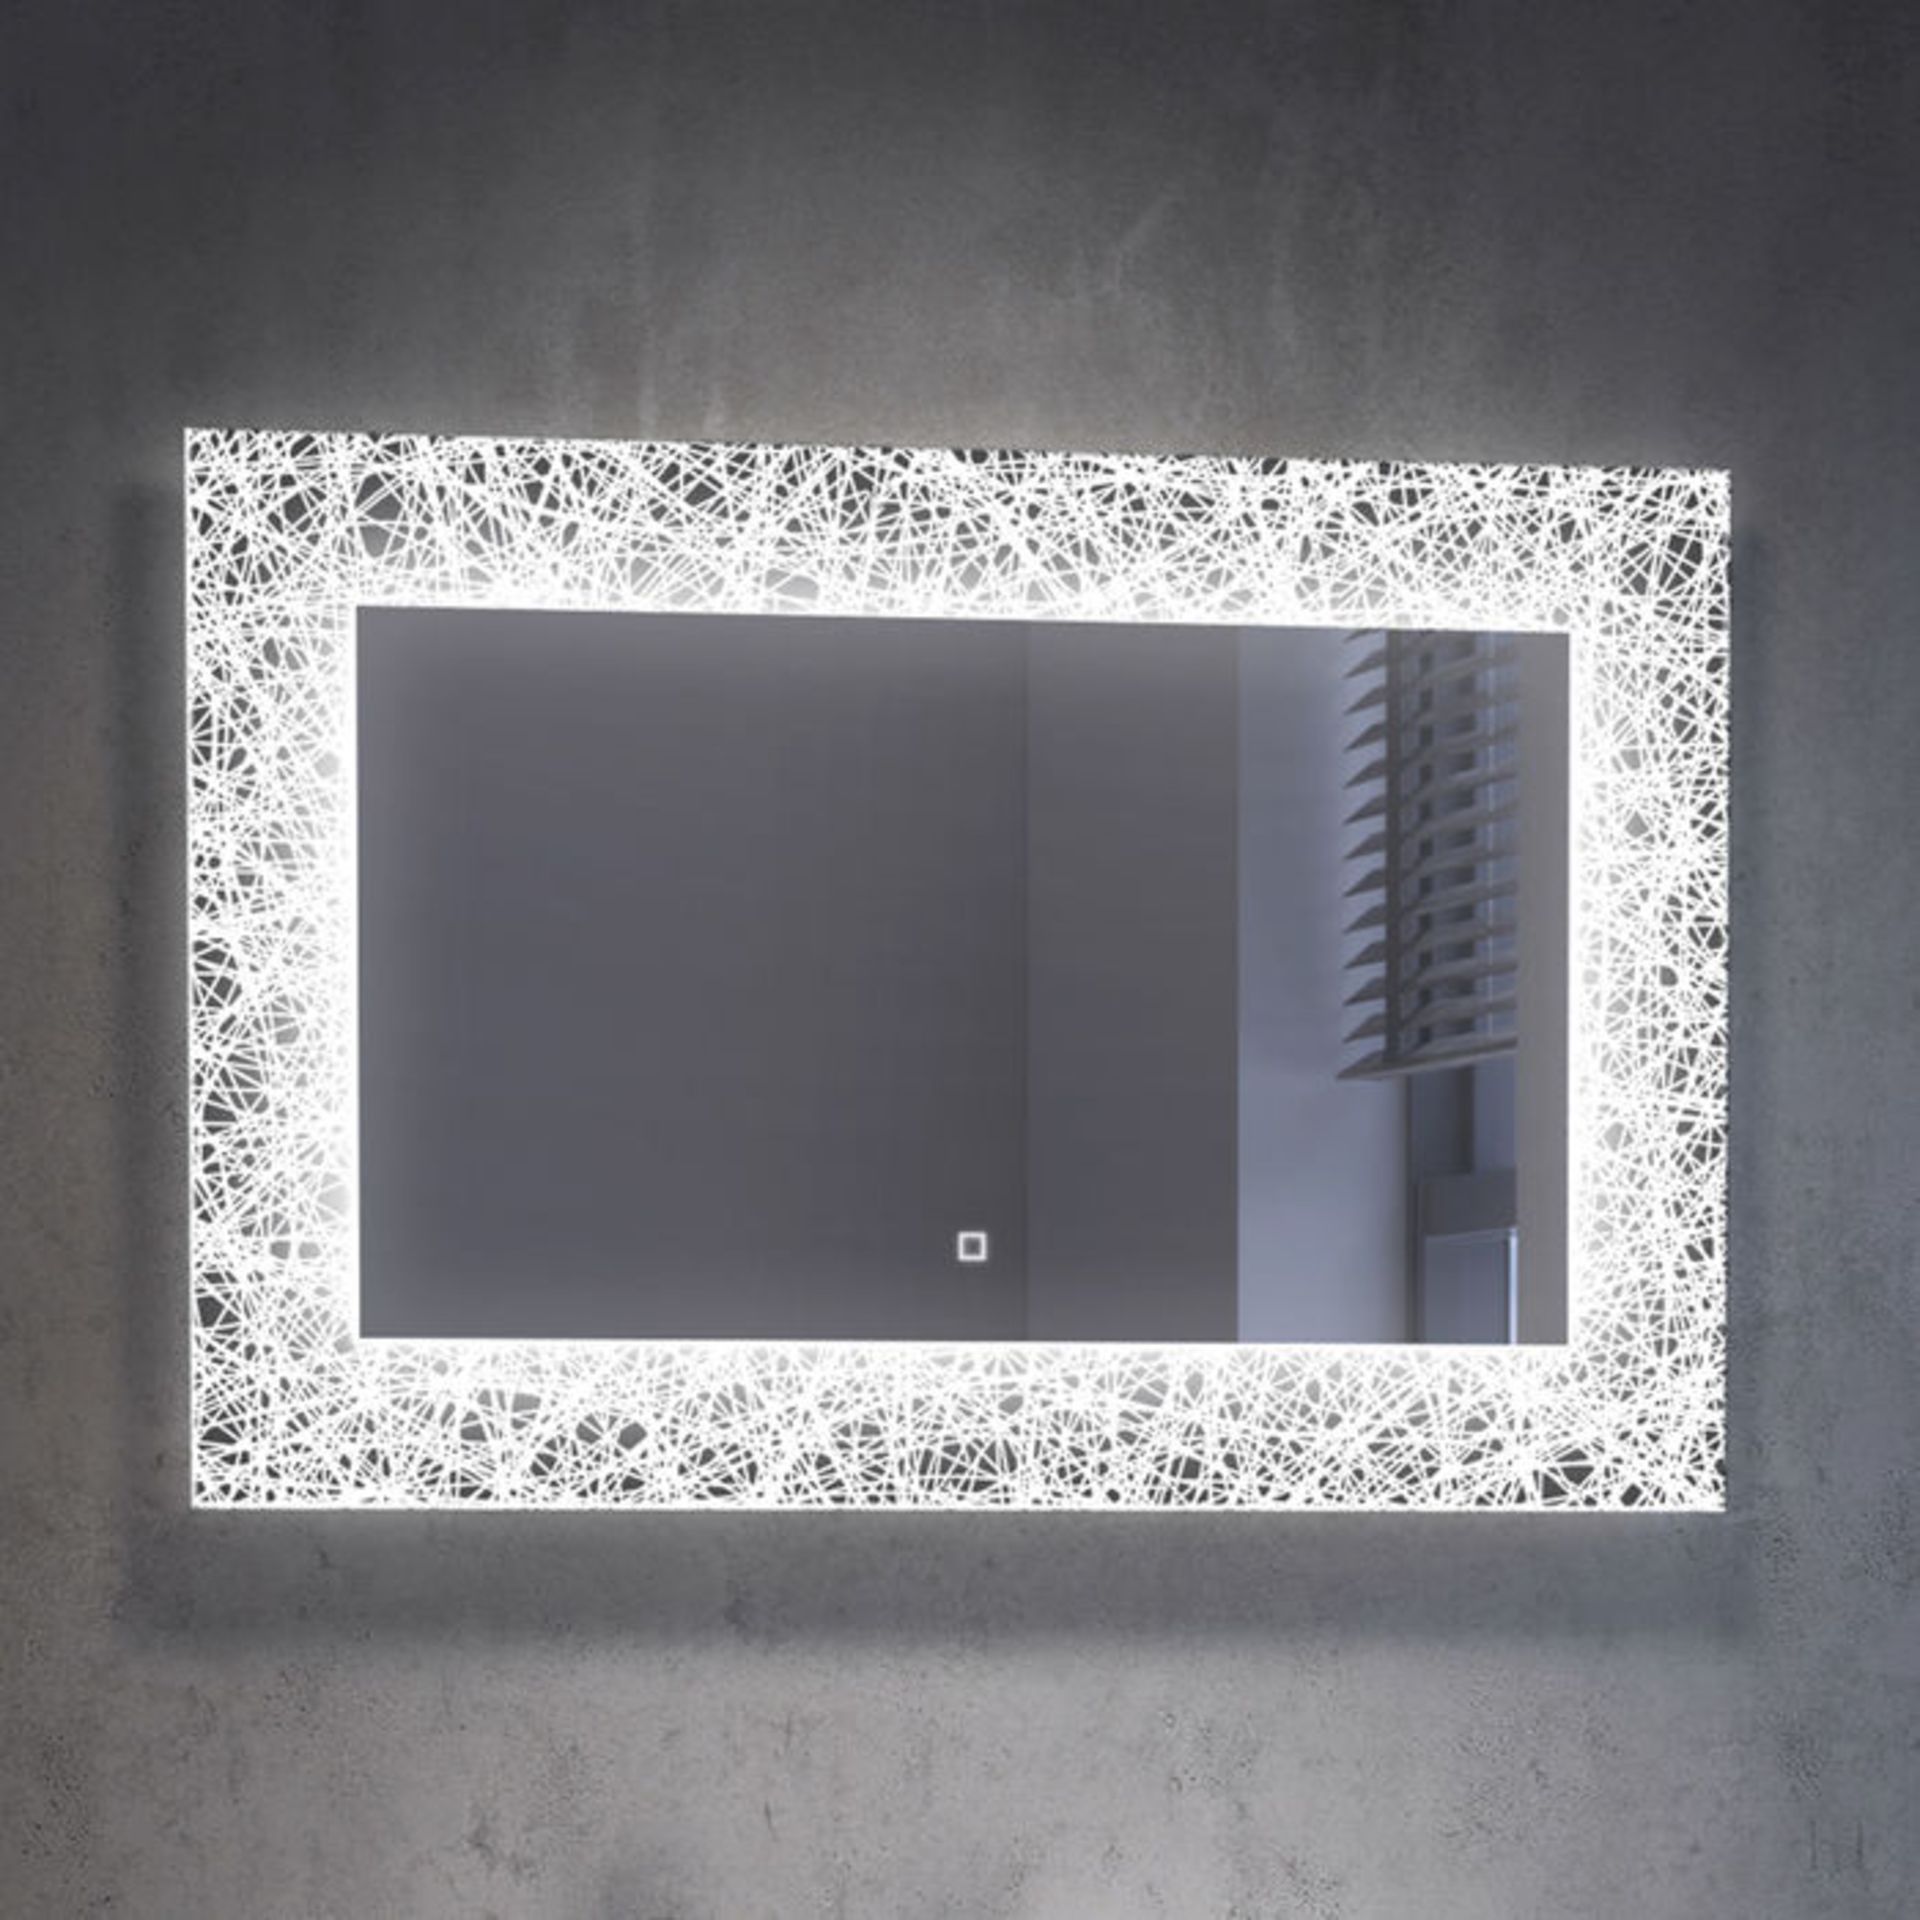 (P69) 600x900mm Celestial Designer Illuminated LED Mirror - Switch Control. RRP £399.99. We love